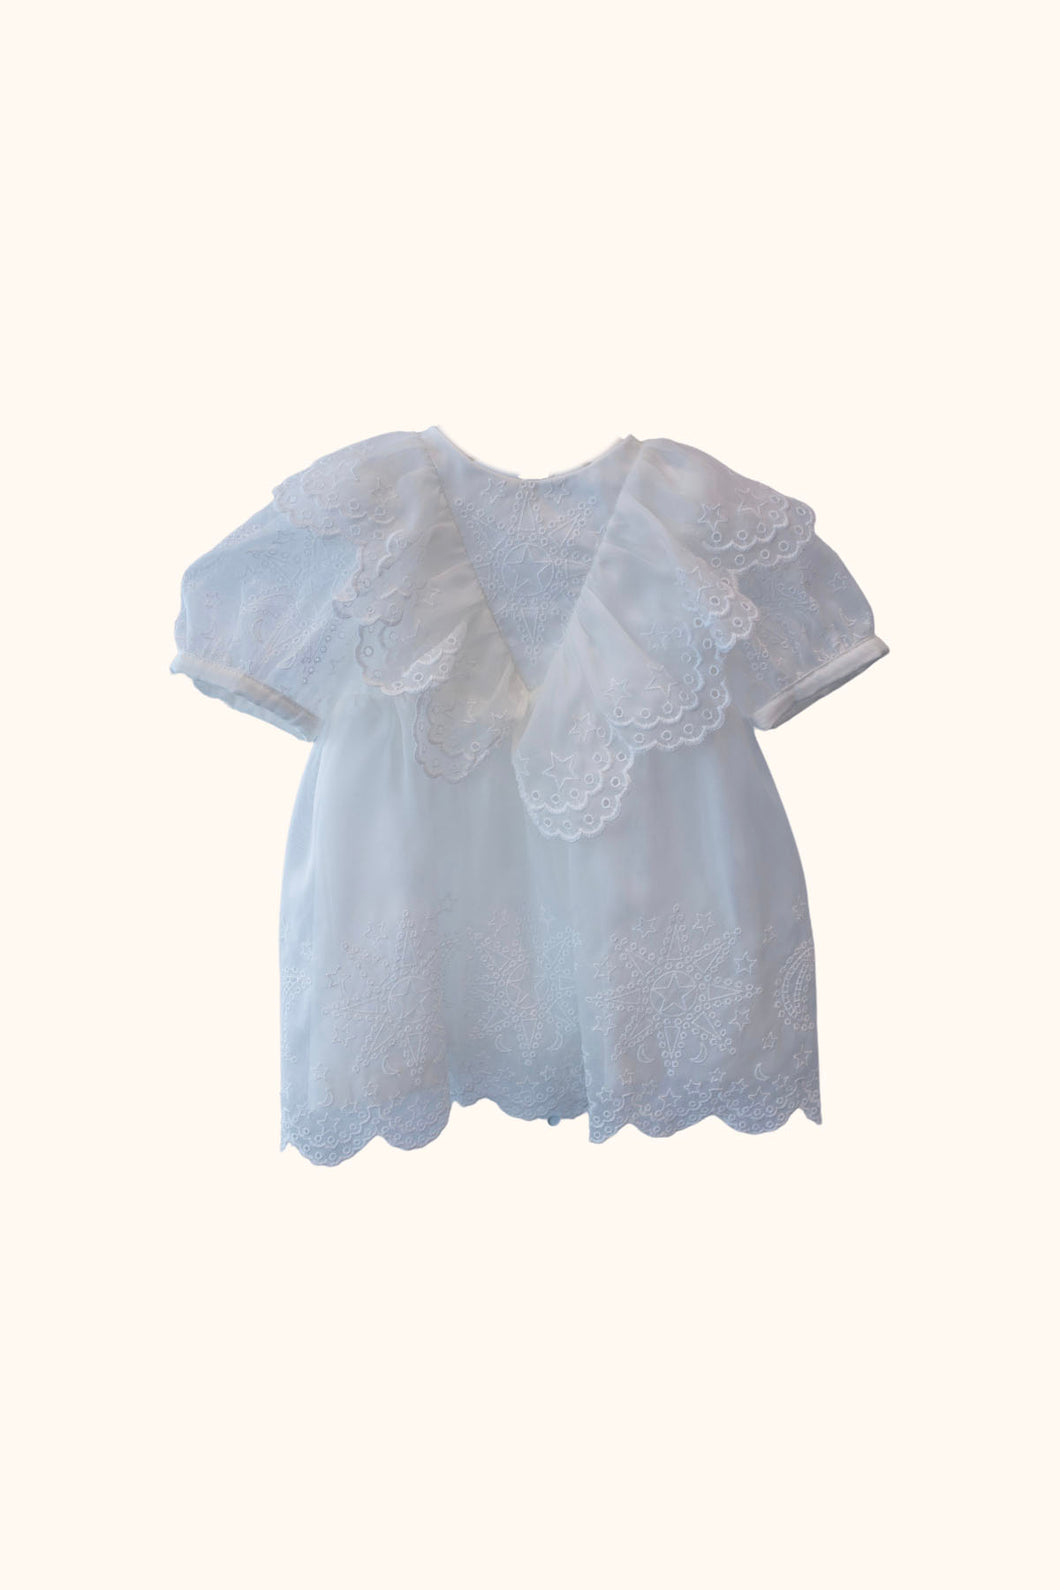 Stella McCartney Baby Embroidered Silk Dress